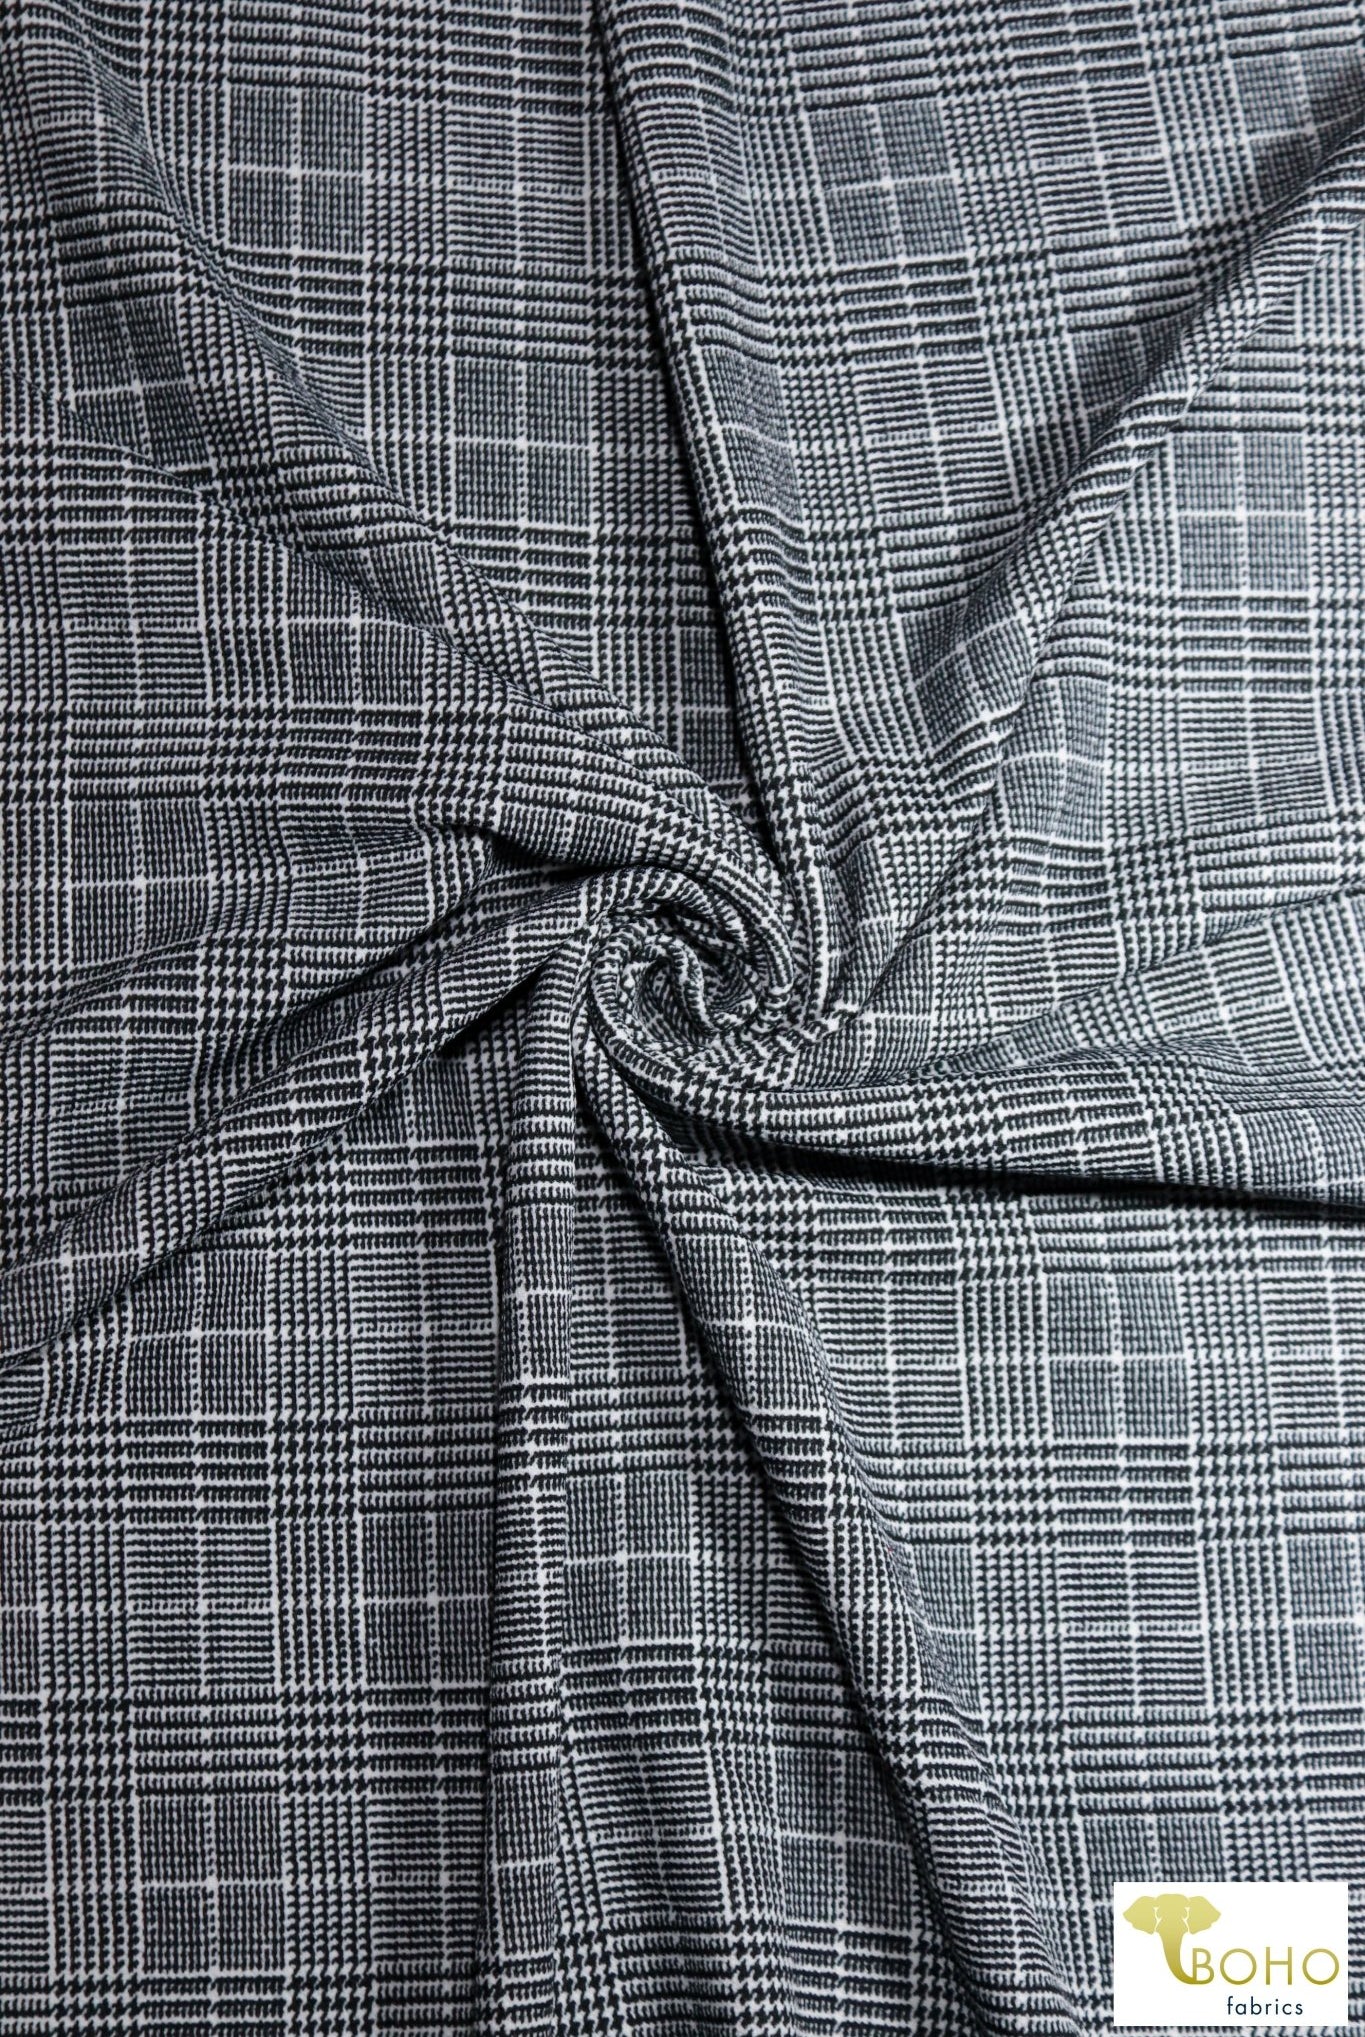 Plaid & Houndstooth, Poly Crepe Knit. - Boho Fabrics